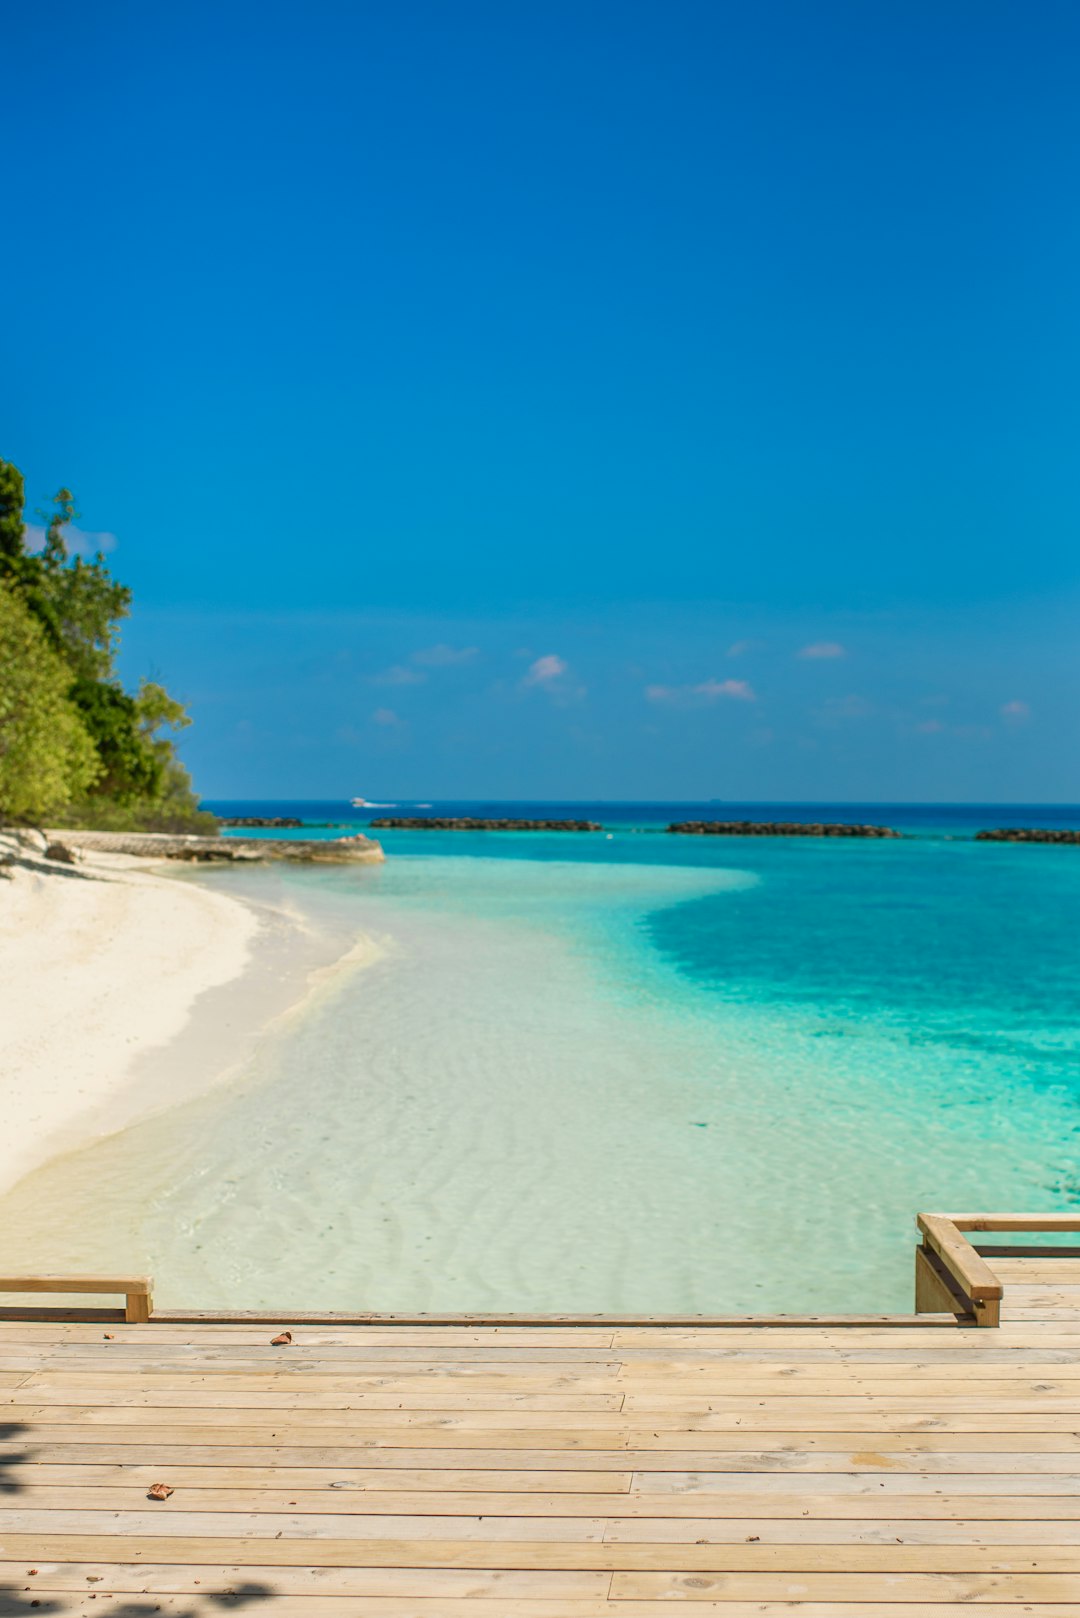 Beach photo spot Bandos Maldives Meeru Island